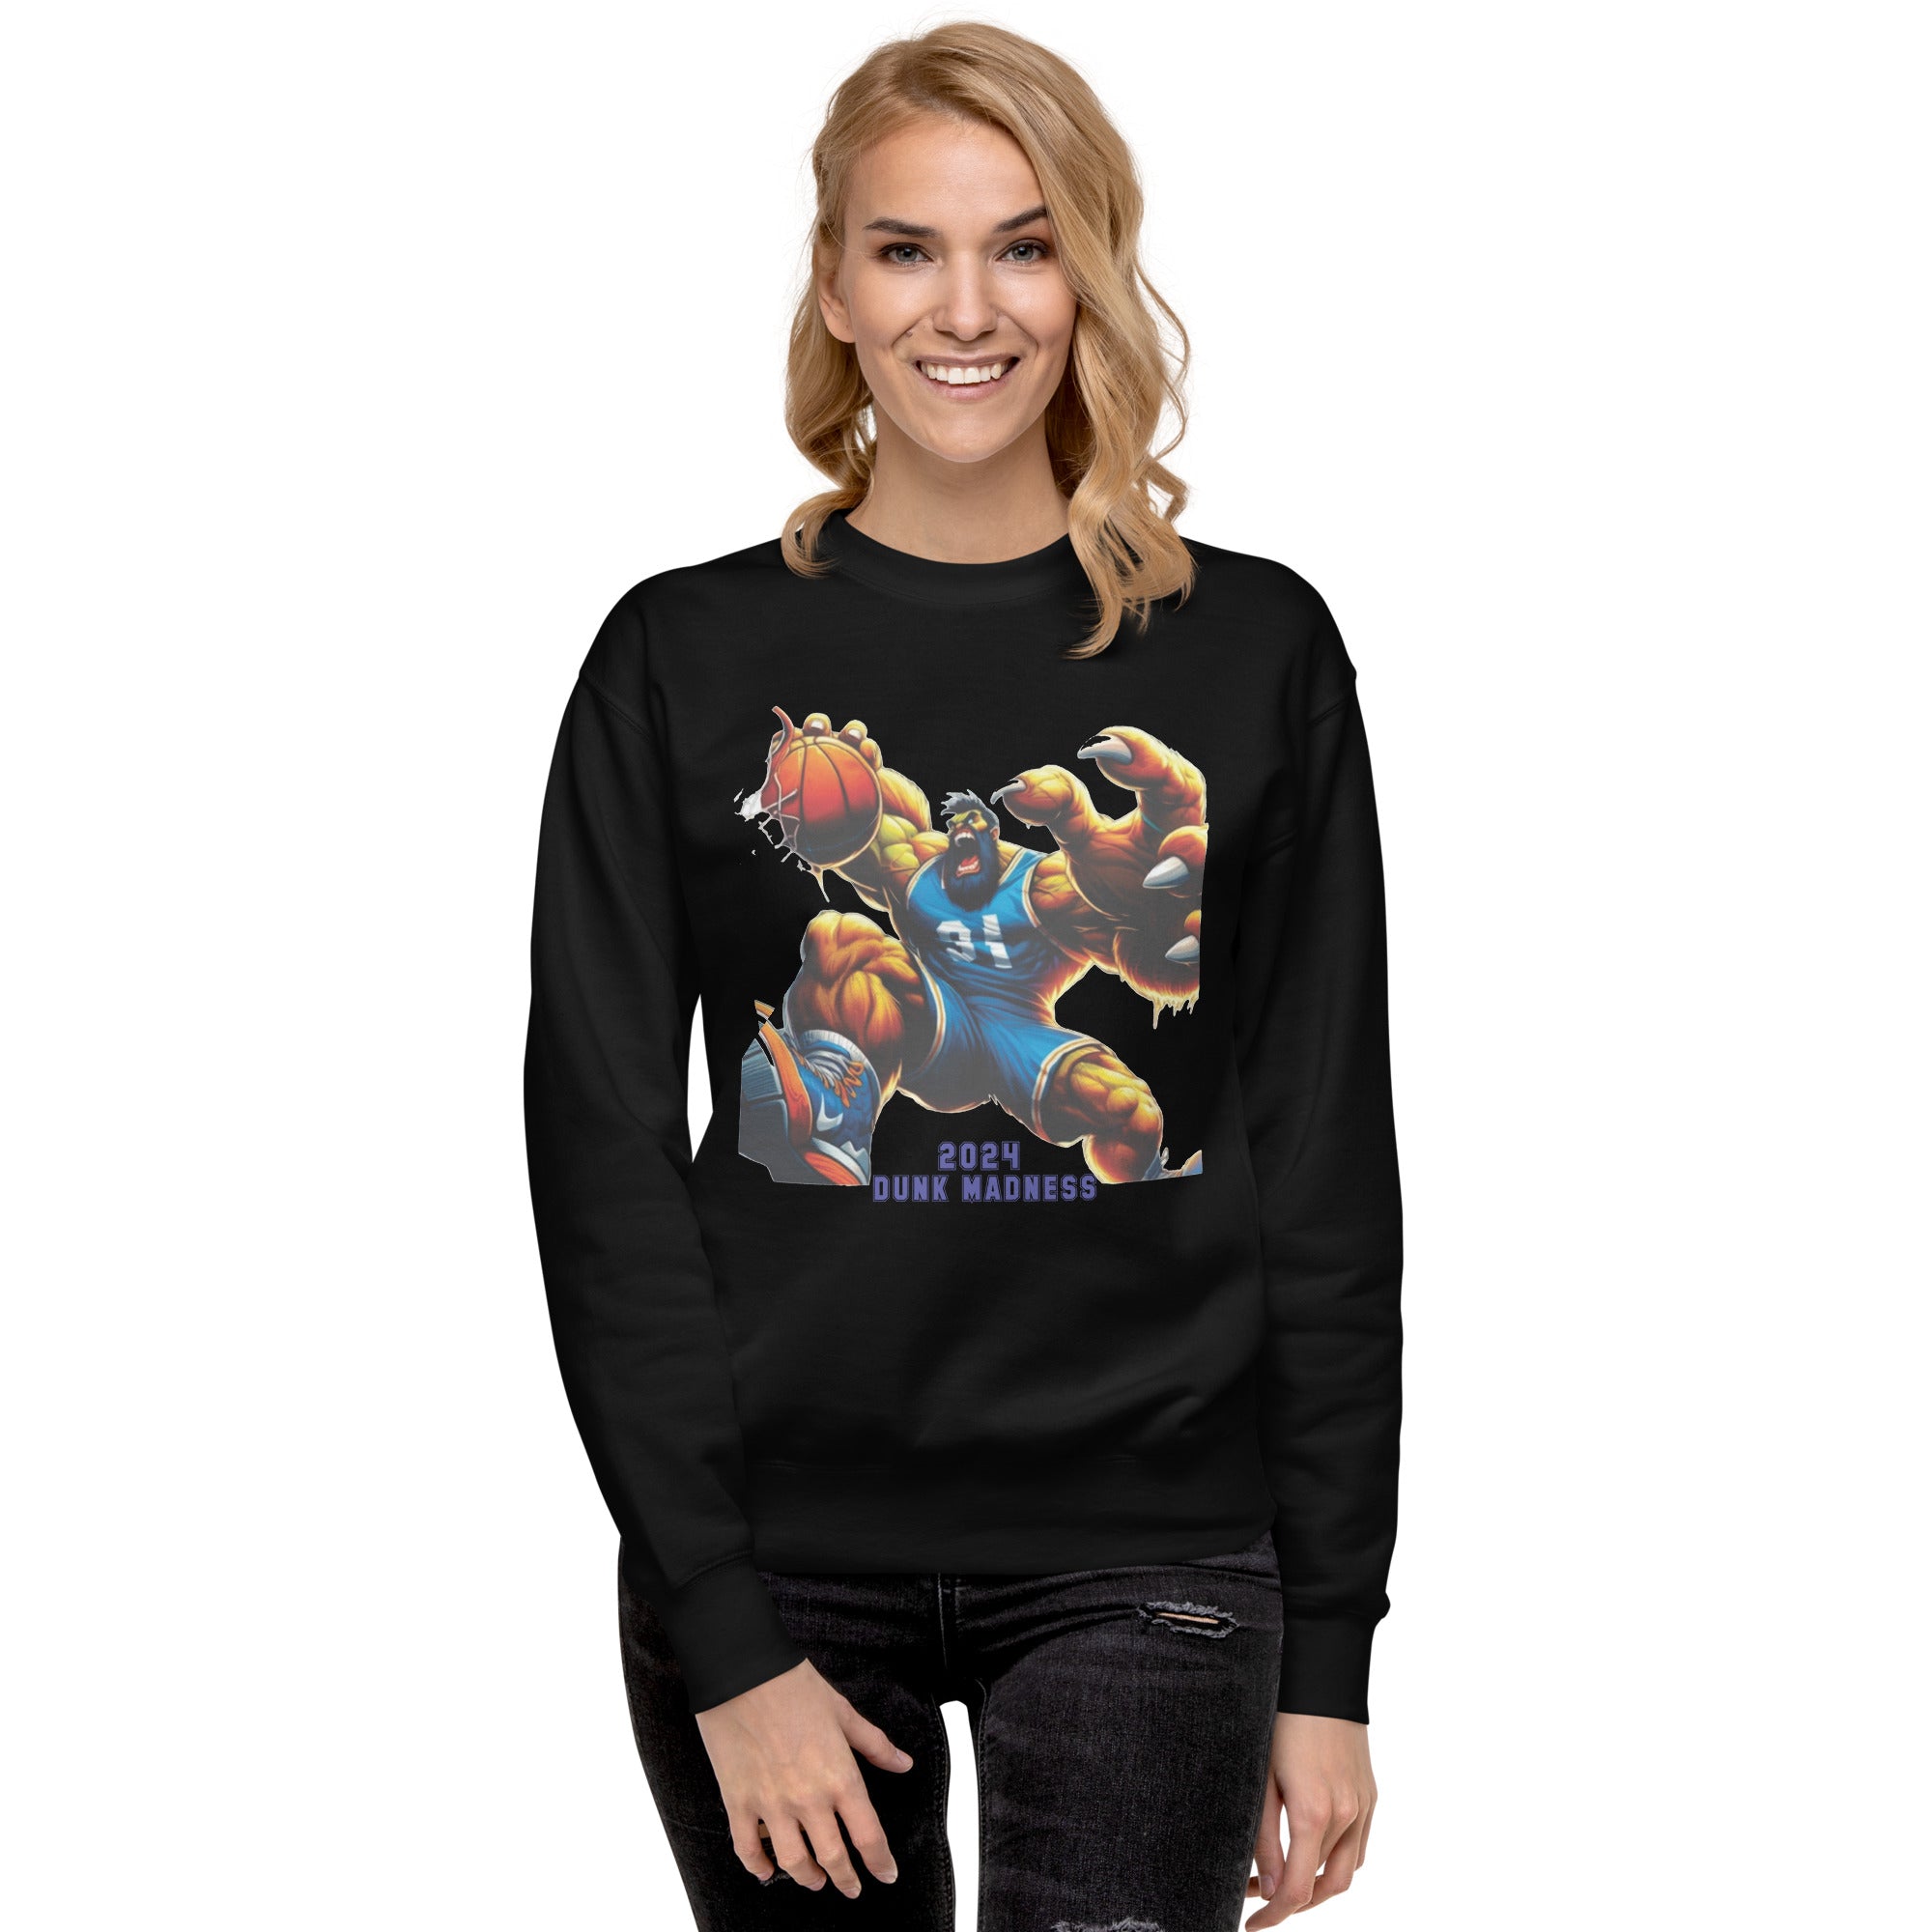 Dunk Madness 2024 Sweatshirt for Women